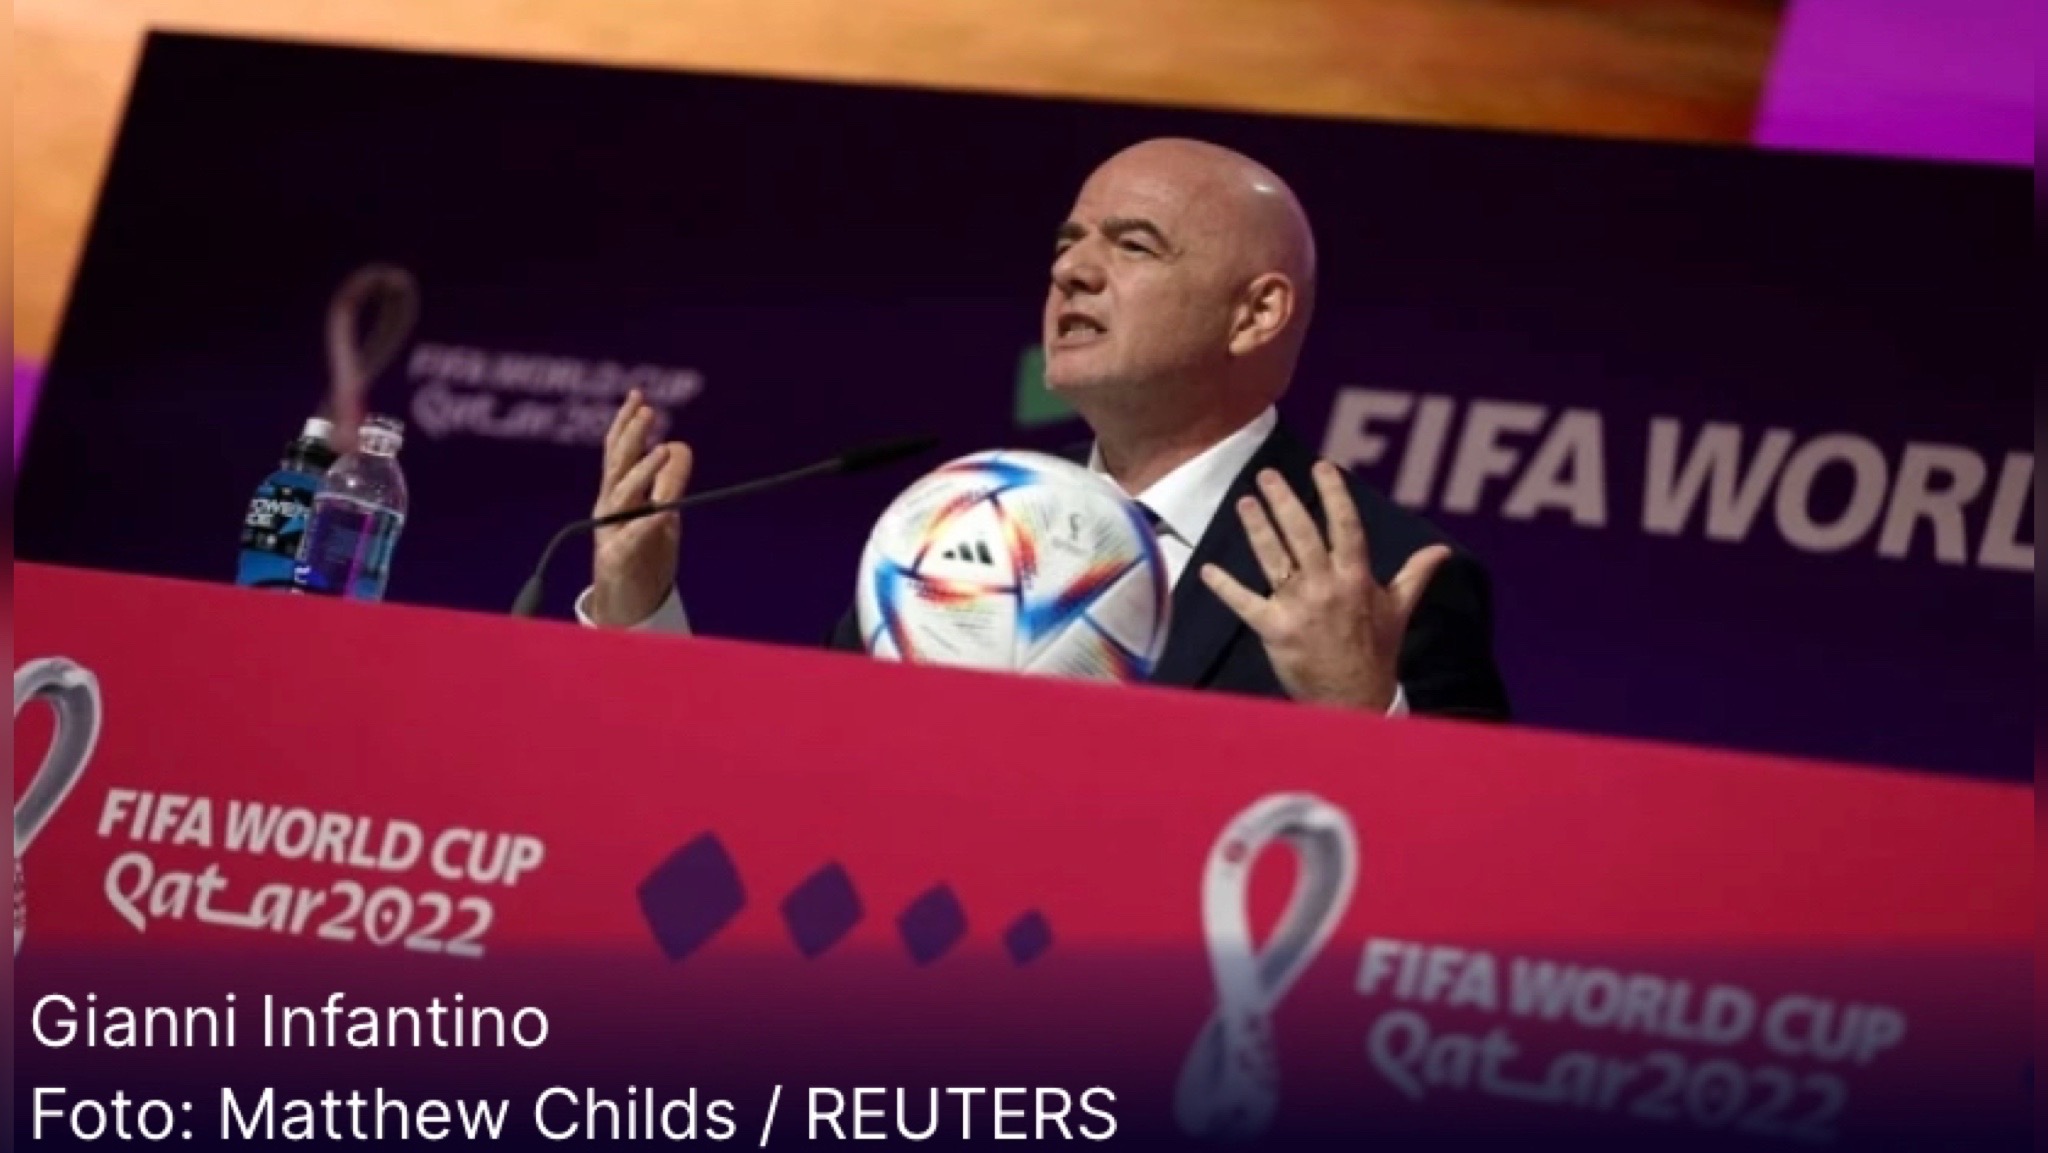 FIFAWorldCupQatar2022, predsjednik FIFA, Gianni Infantino, zapad, licemjerje